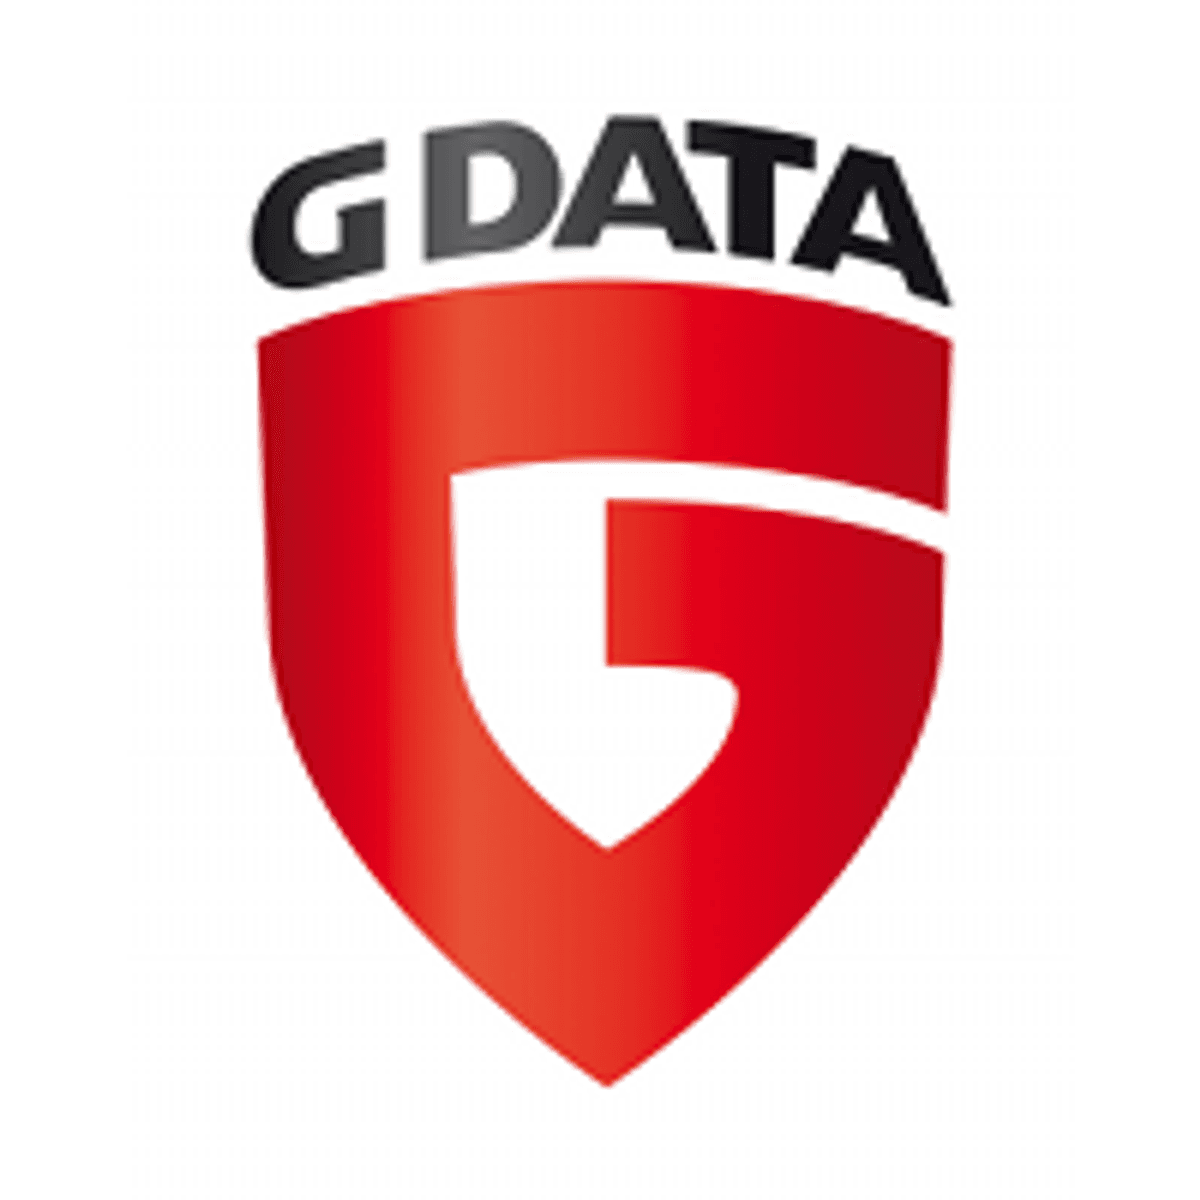 G DATA Next Generation 2018 security beschermt Windows devices image